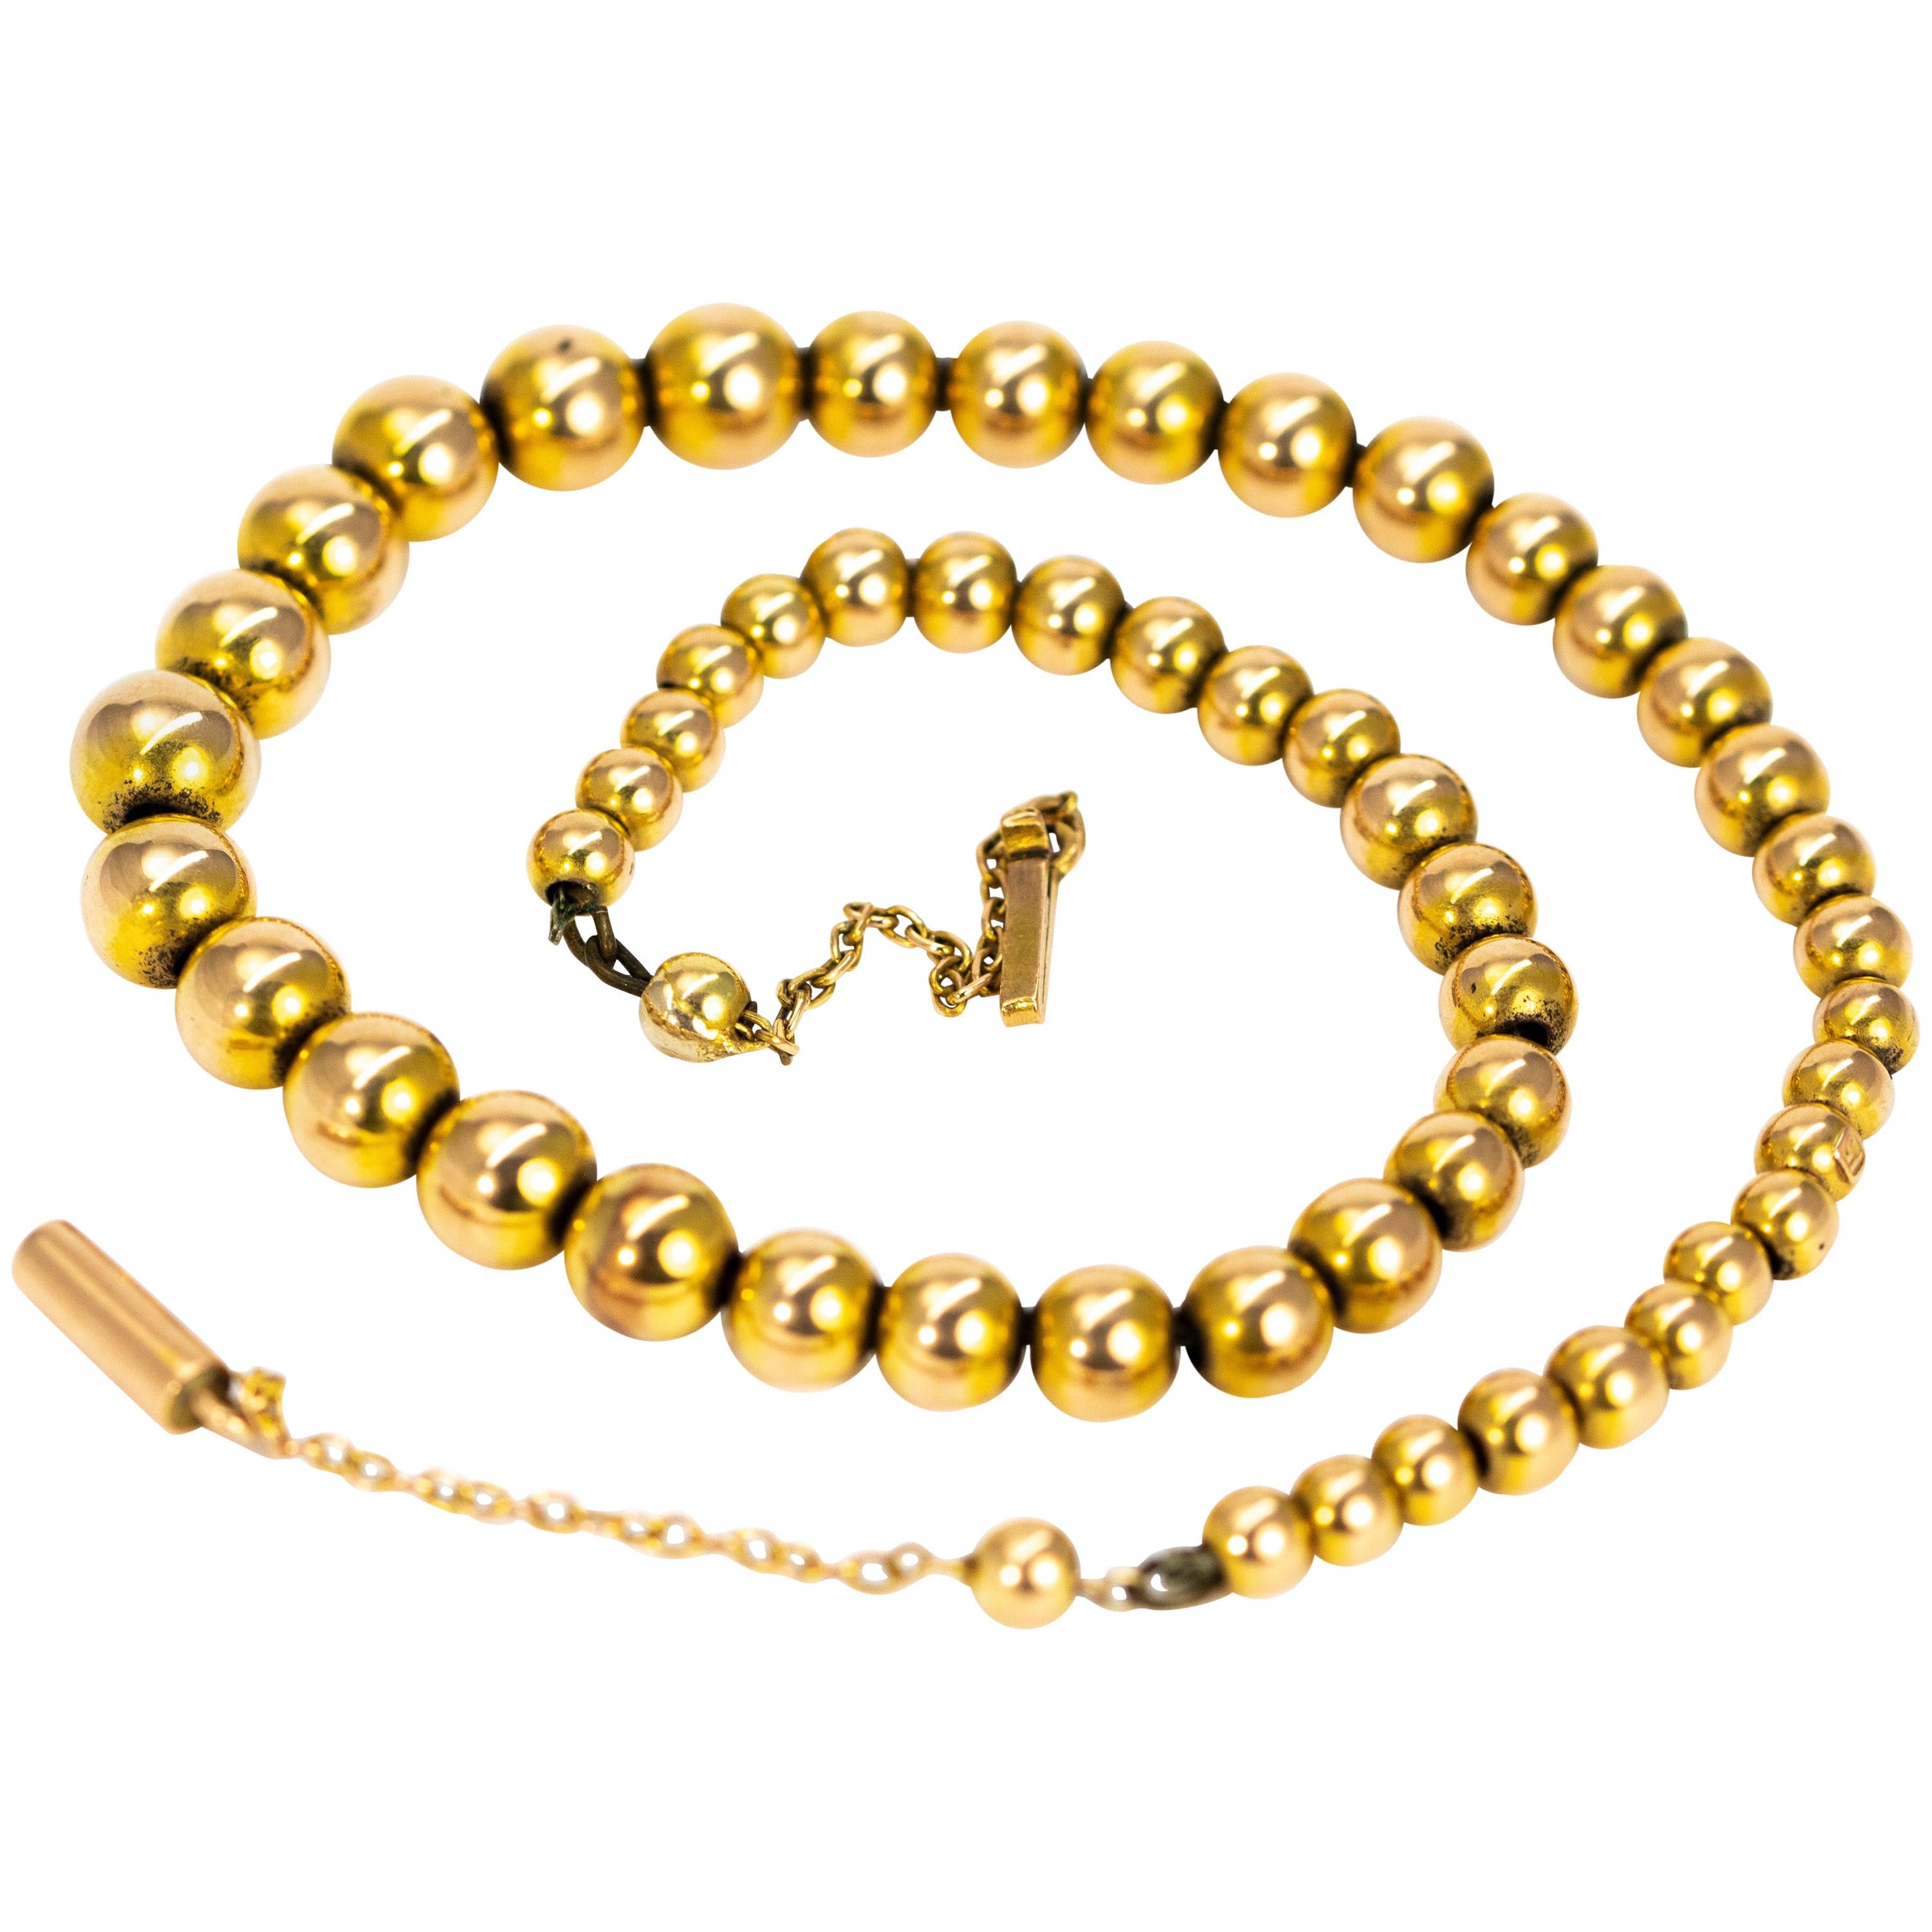 Antique 15 Carat Gold Ball Necklace